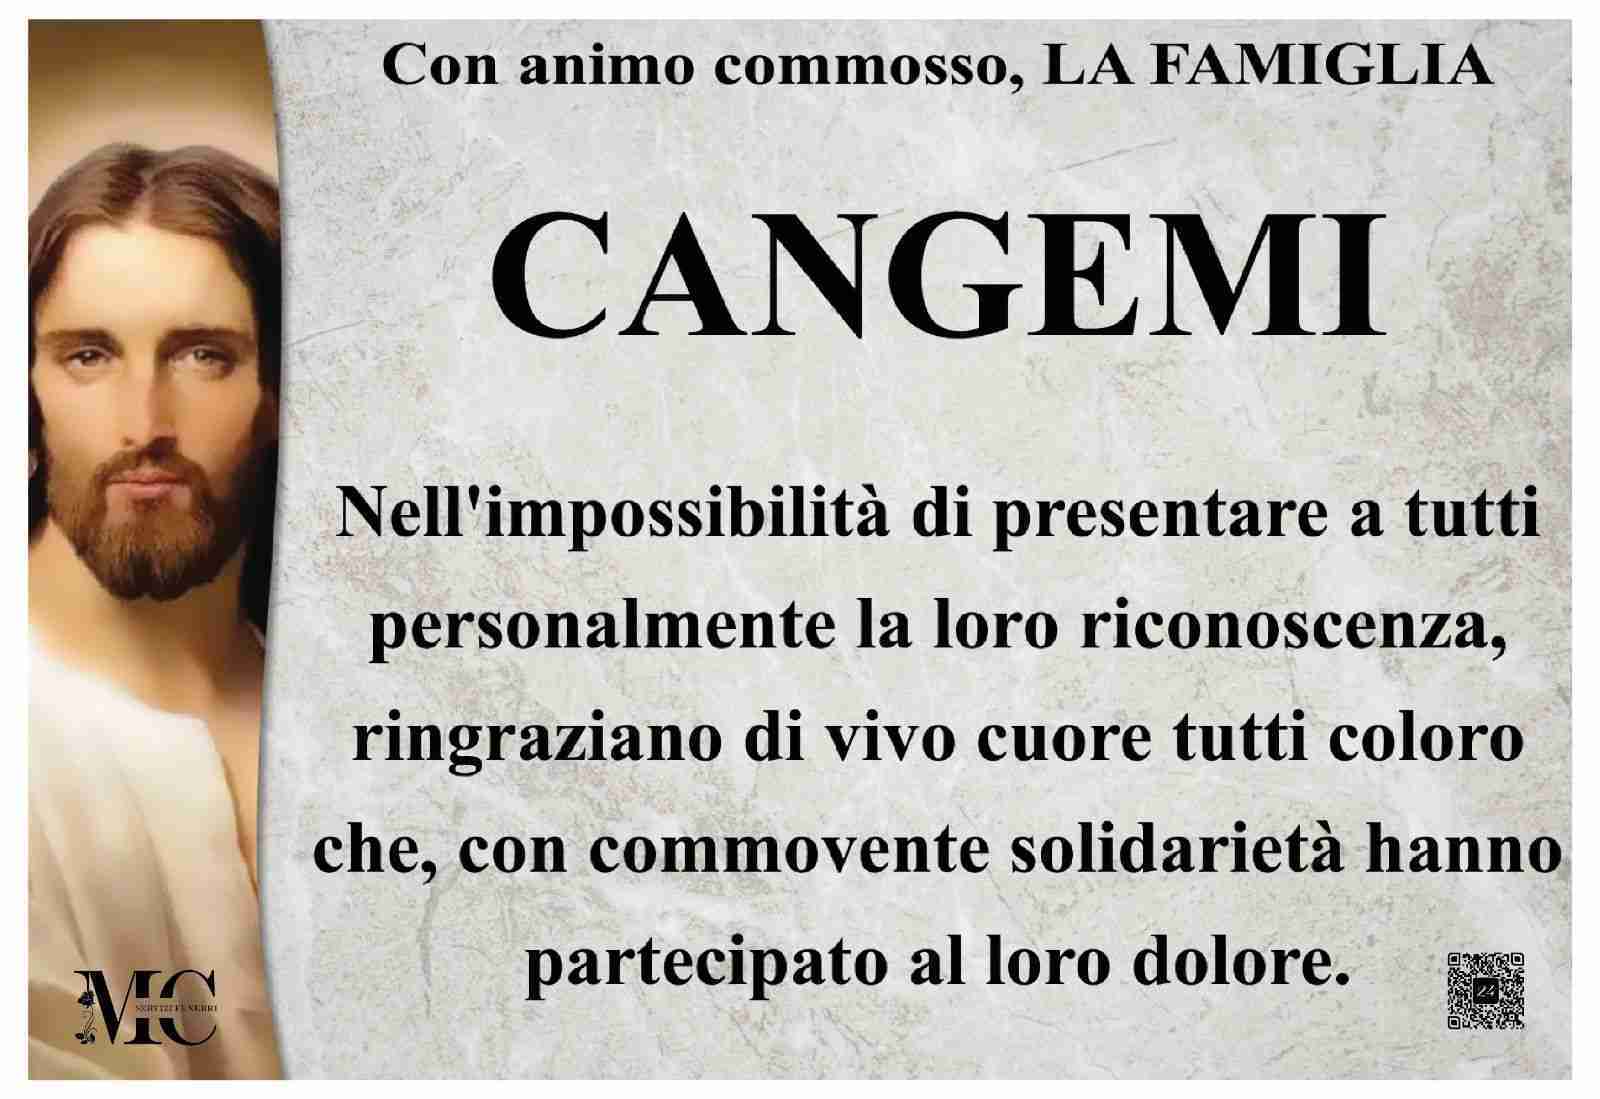 Salvatore Cangemi